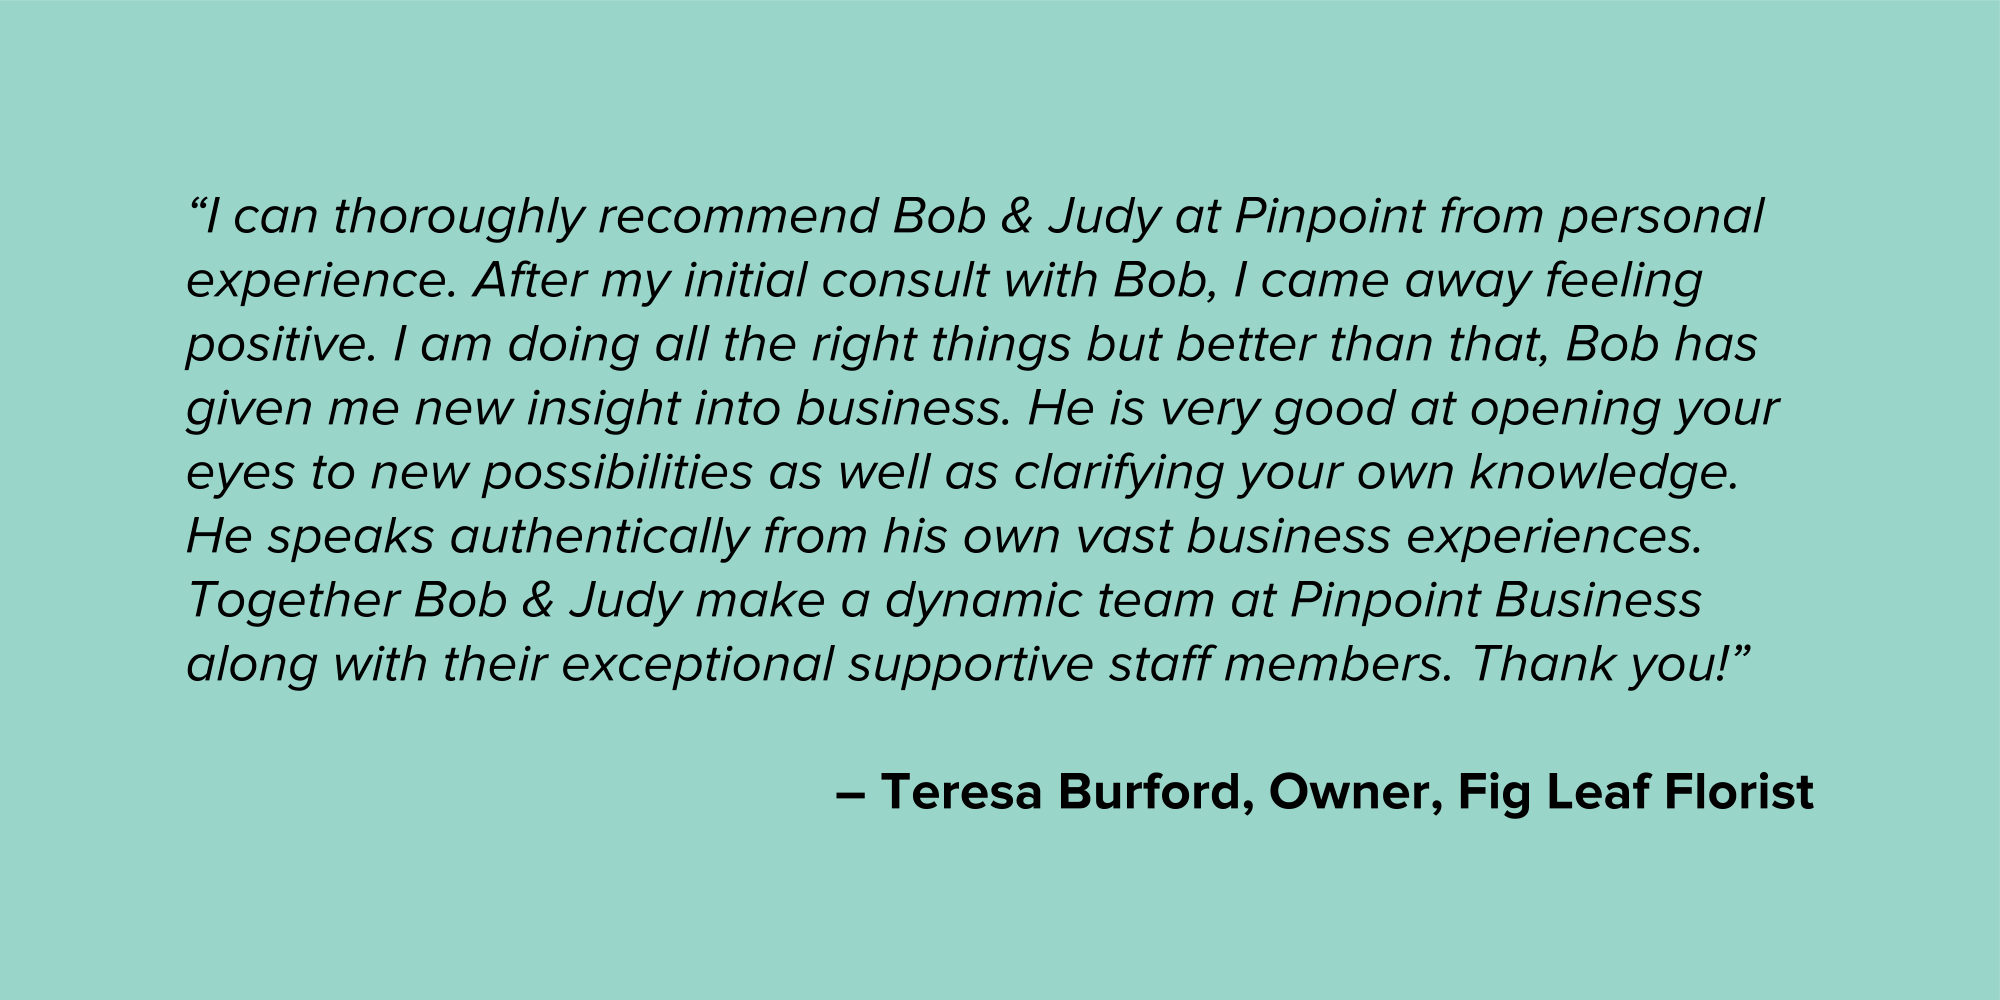 Teresa Burford Micro Business Testimonial Quote 